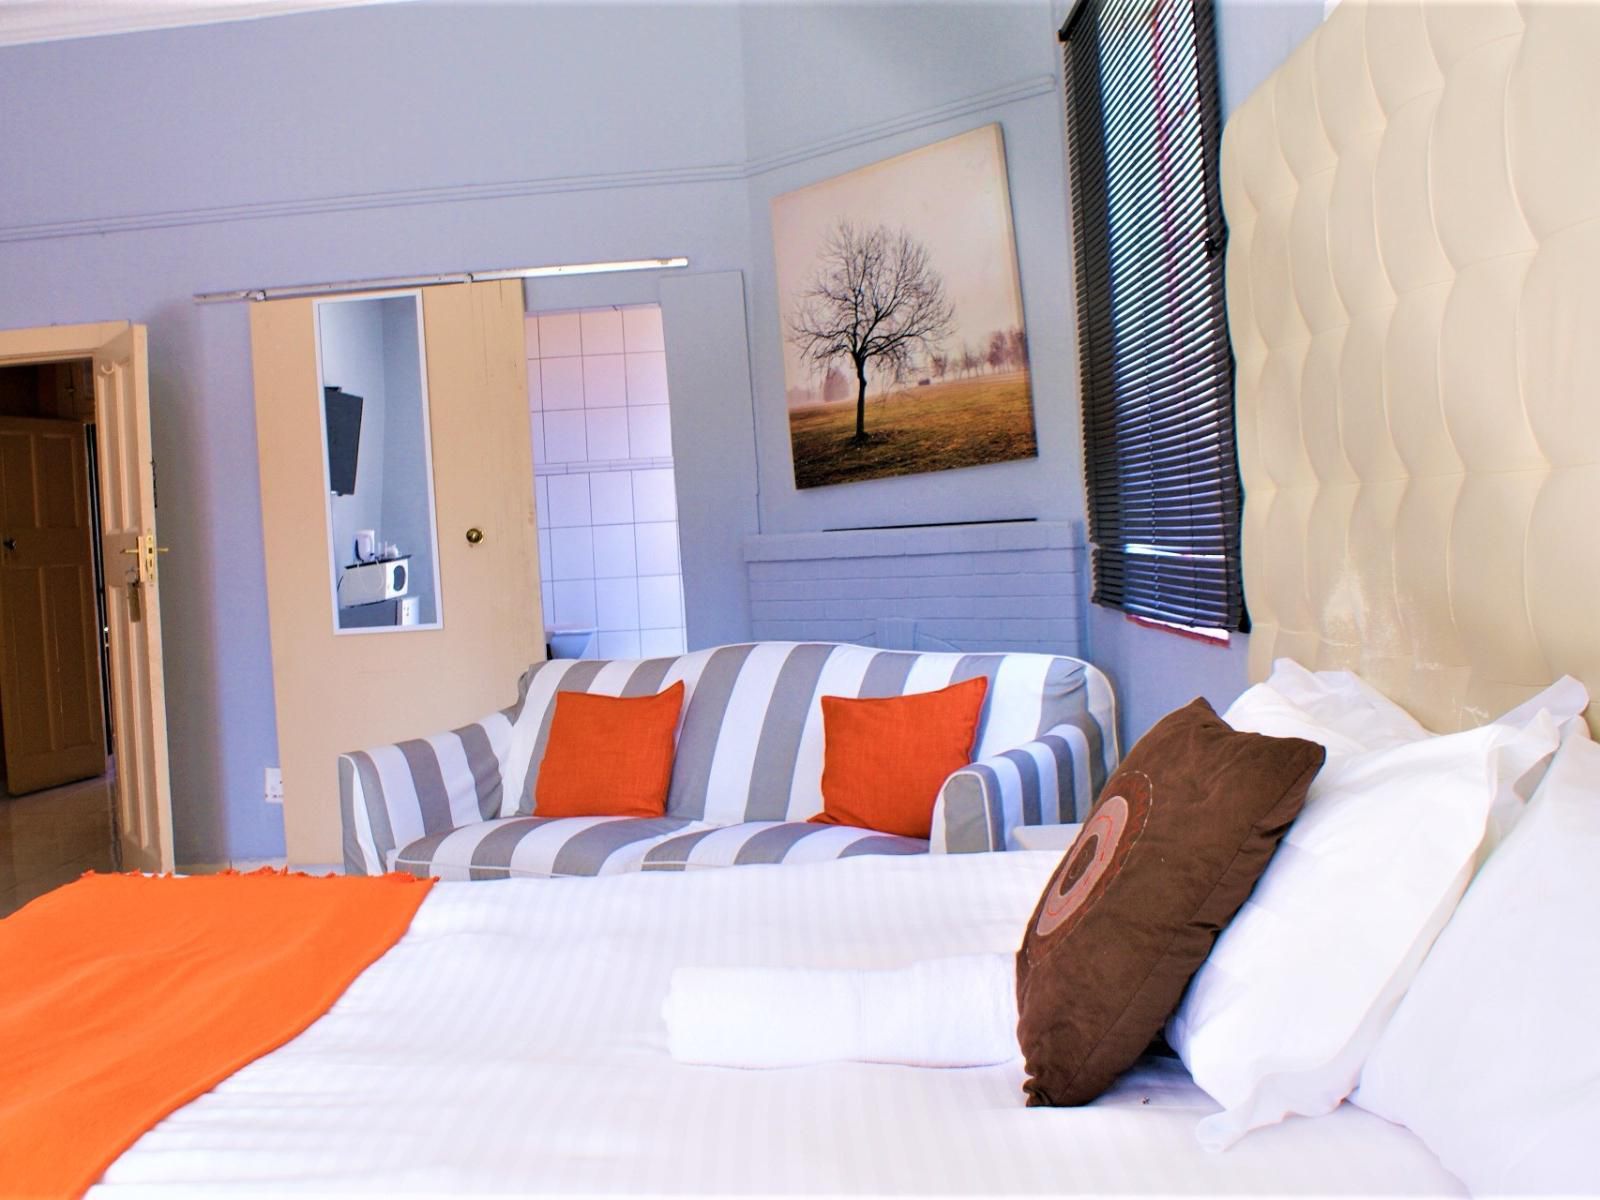 Tshinakie Guesthouse Sunnyside Pretoria Tshwane Gauteng South Africa Complementary Colors, Bedroom